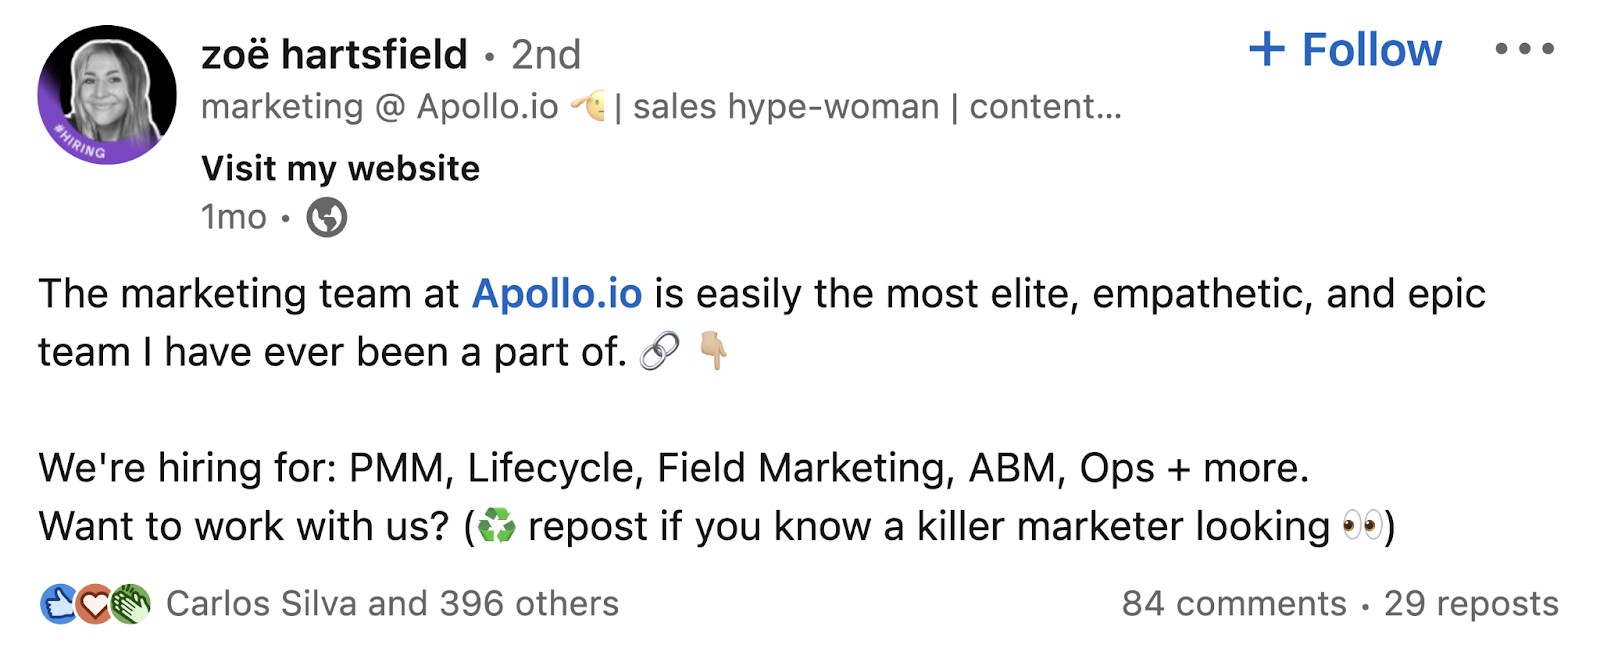 Zoë Hartsfield's LinkedIn station  astir  Apollo.io's selling  team